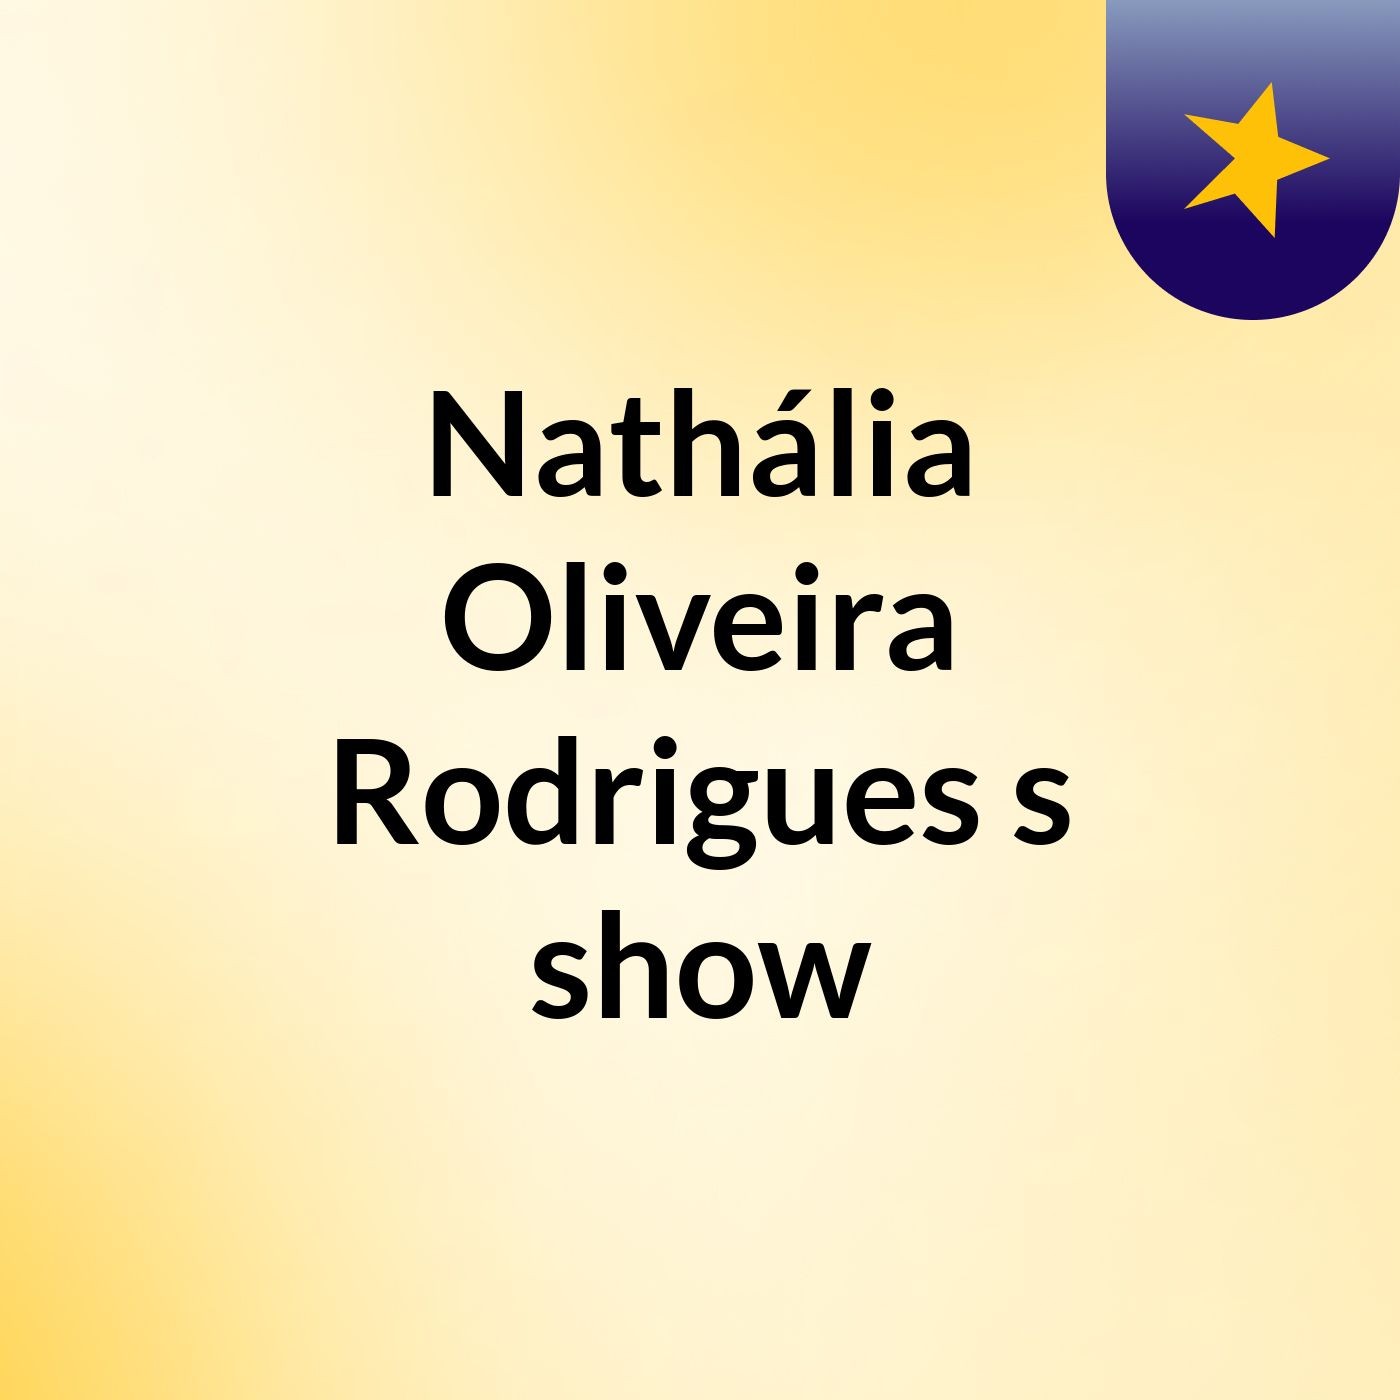 Nathália Oliveira Rodrigues's show